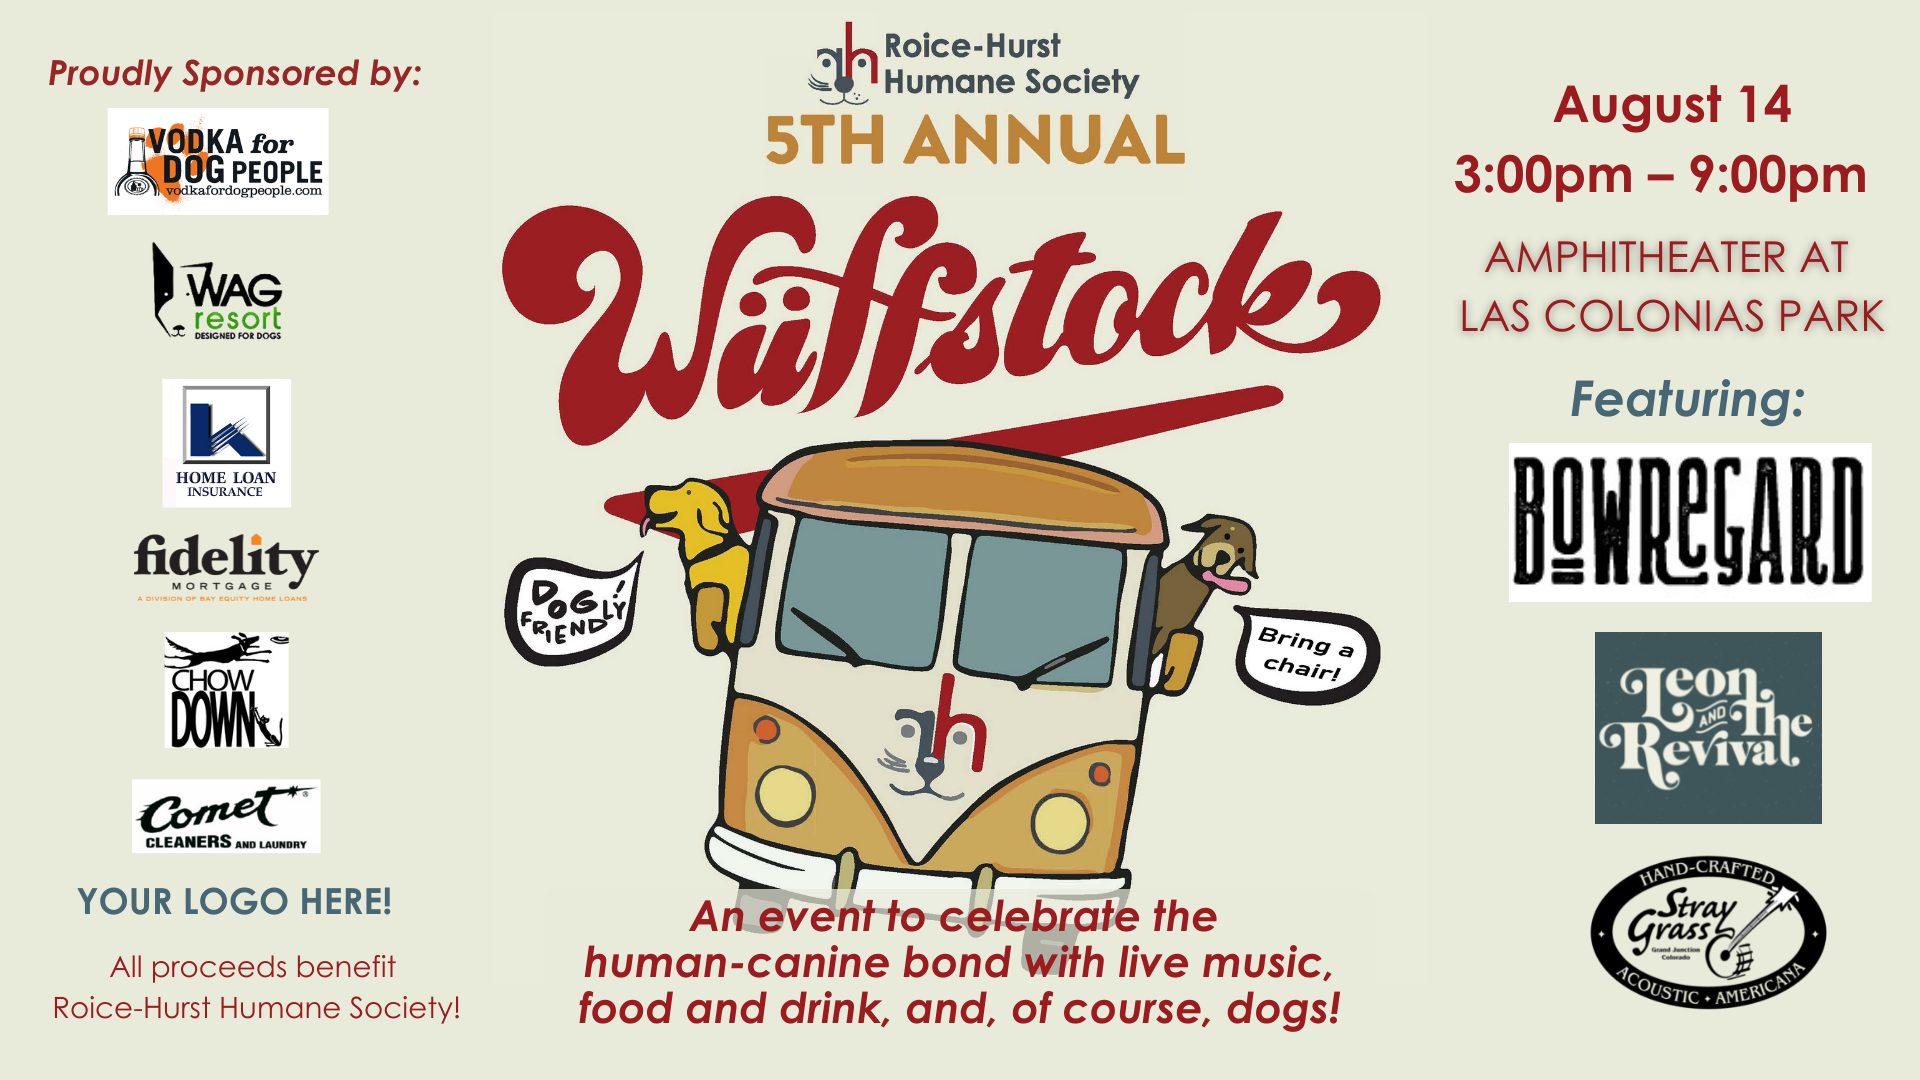 5th Annual Wüffstock Music Festival